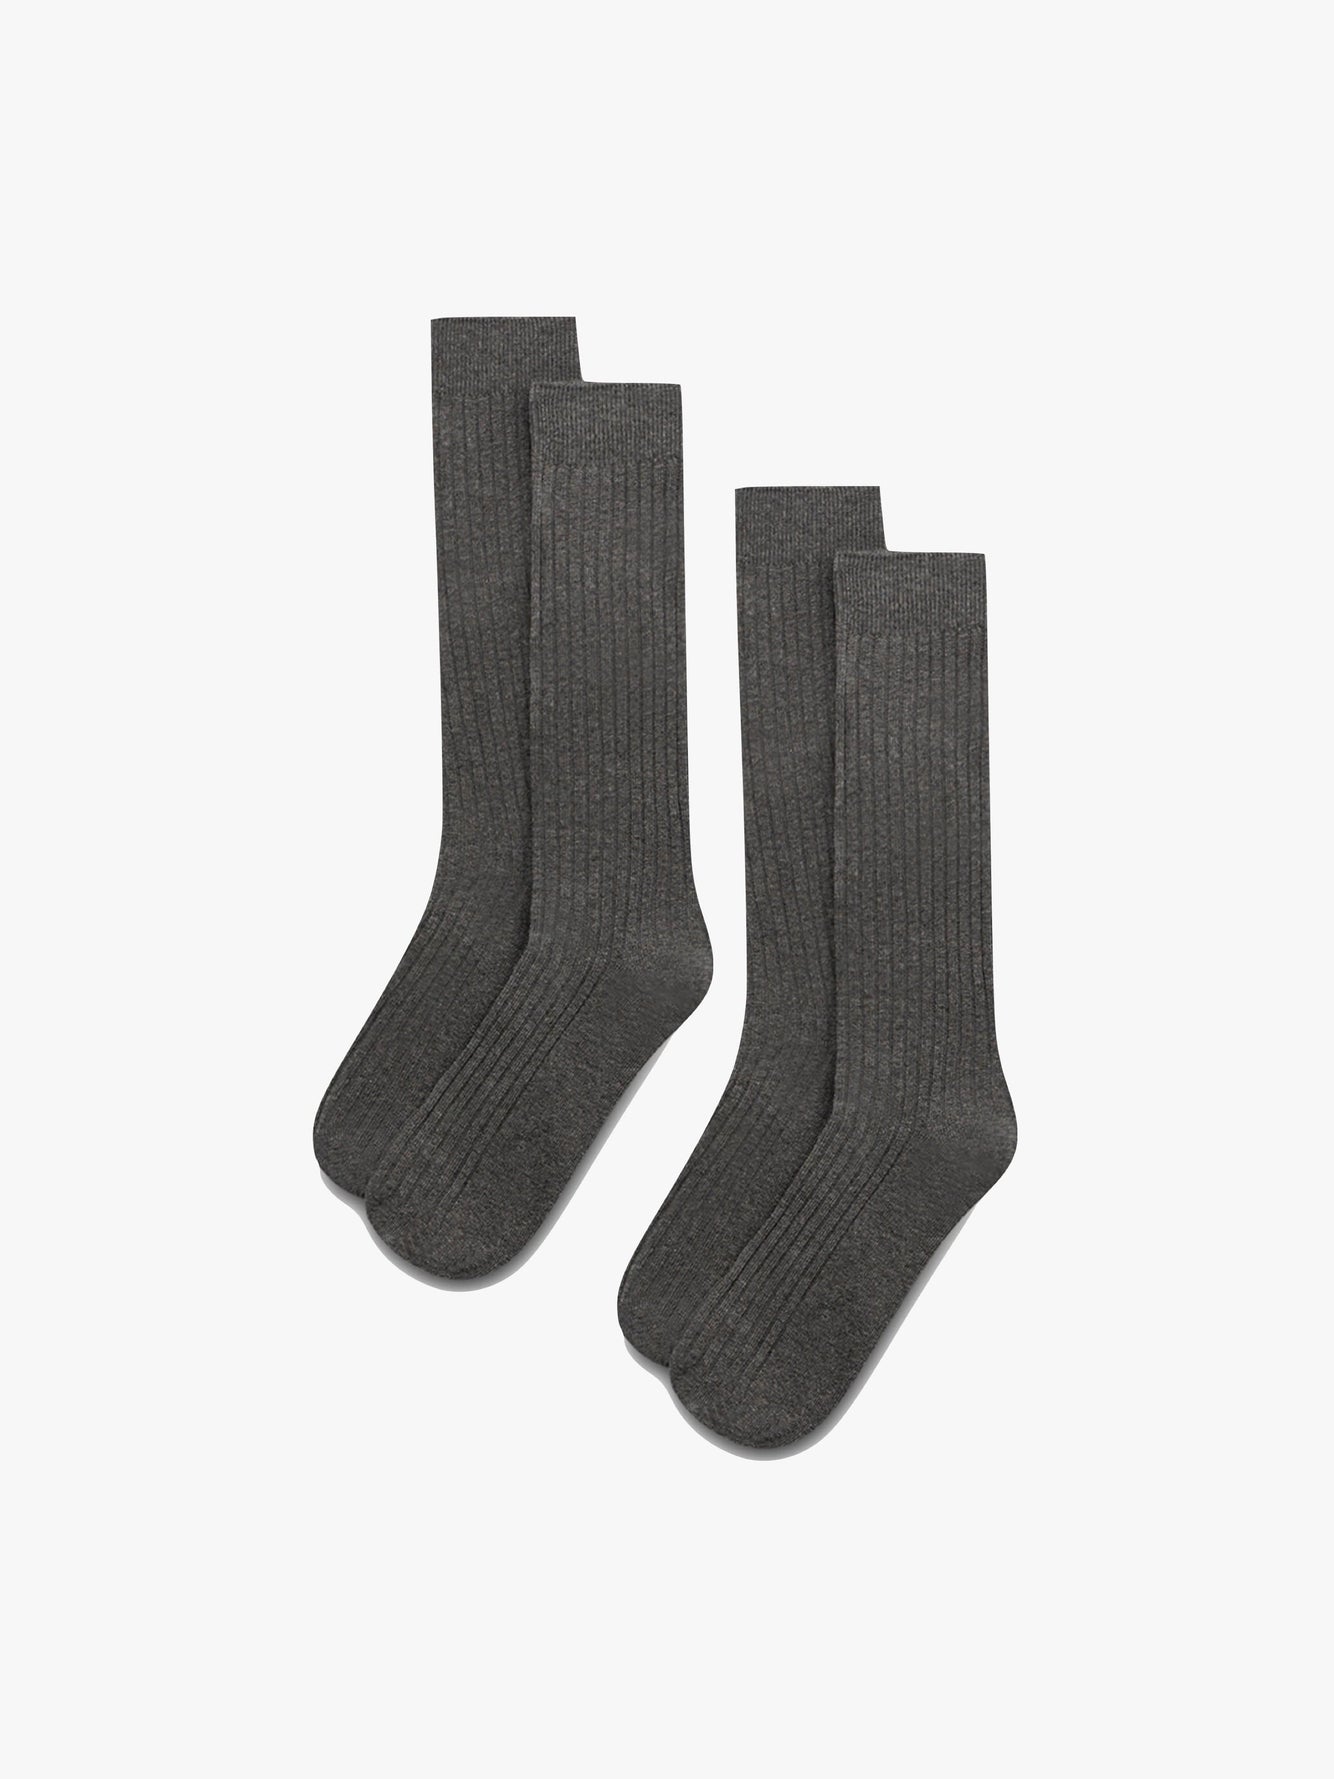 Grey One Pack Floral Socks, Underwear, Socks & Tights